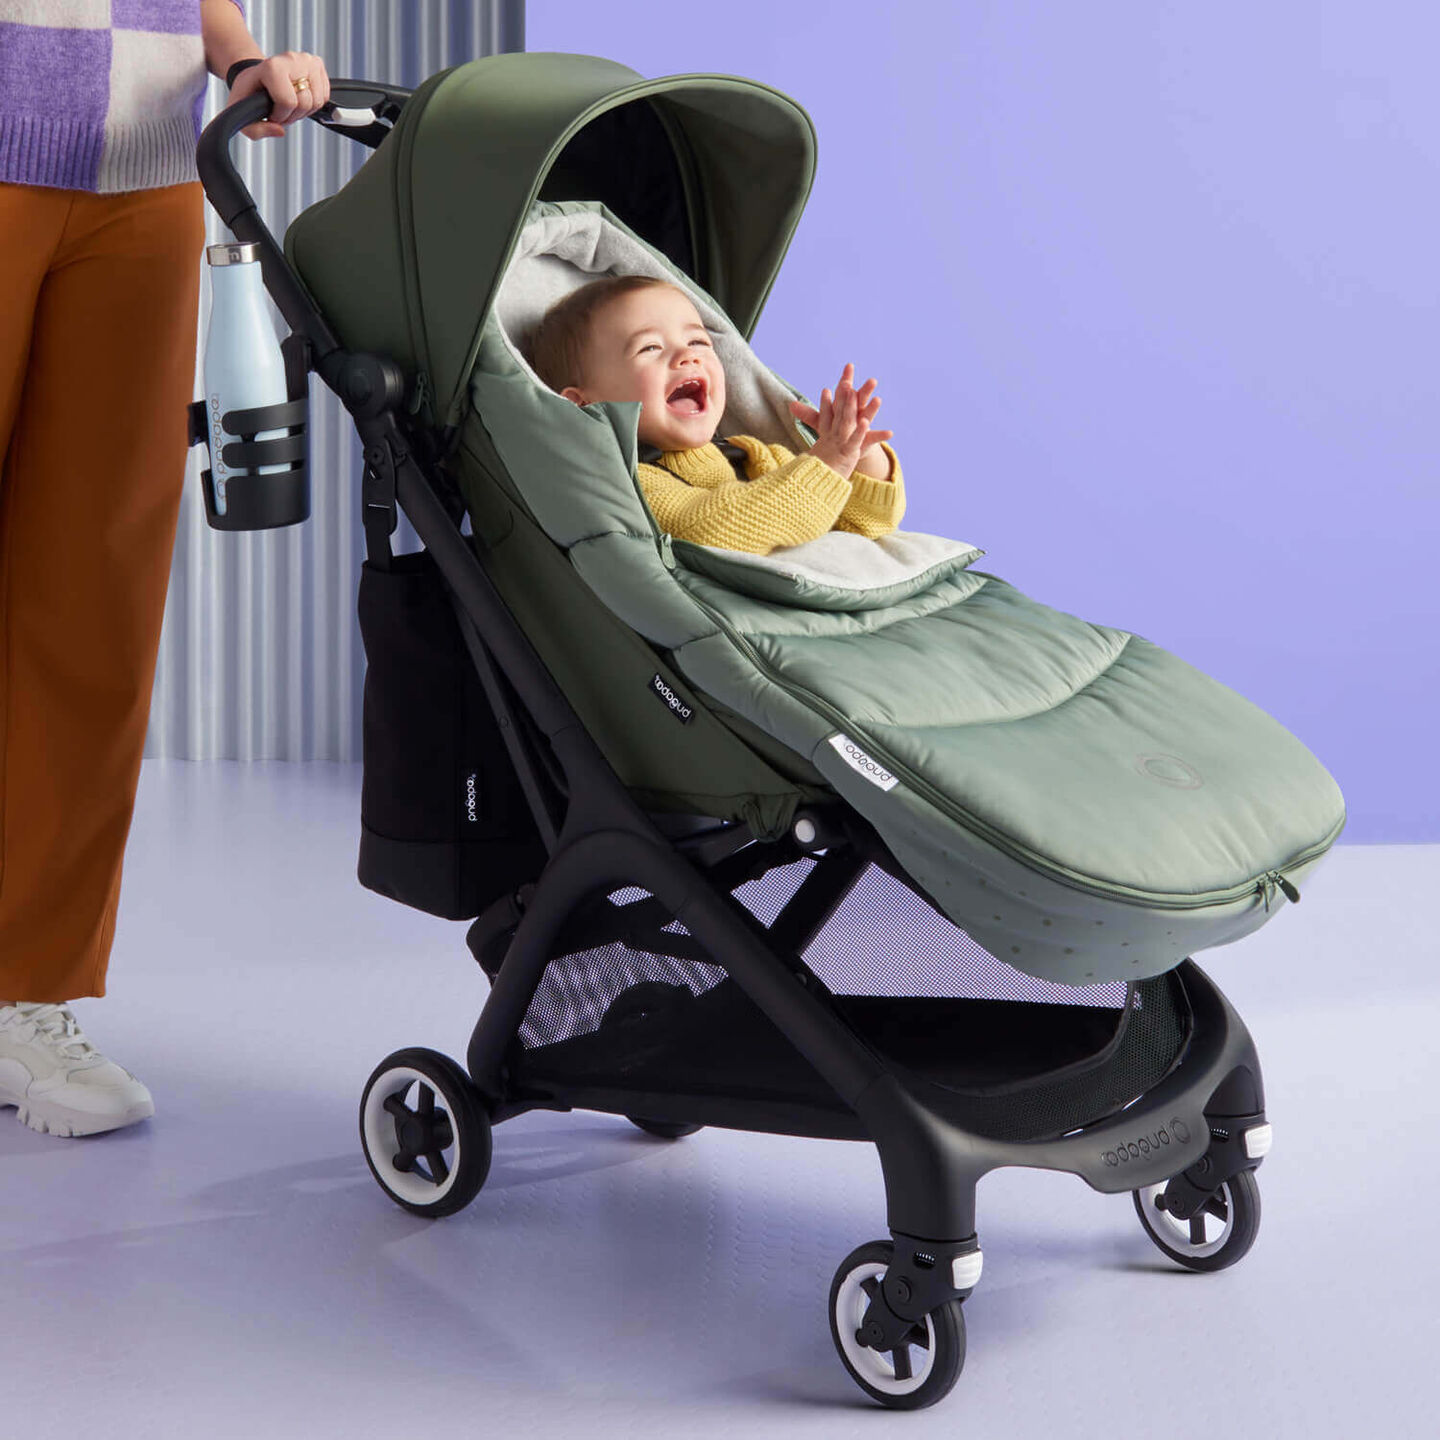 Baby snug inside a Bugaboo footmuff in a Butterfly stroller.